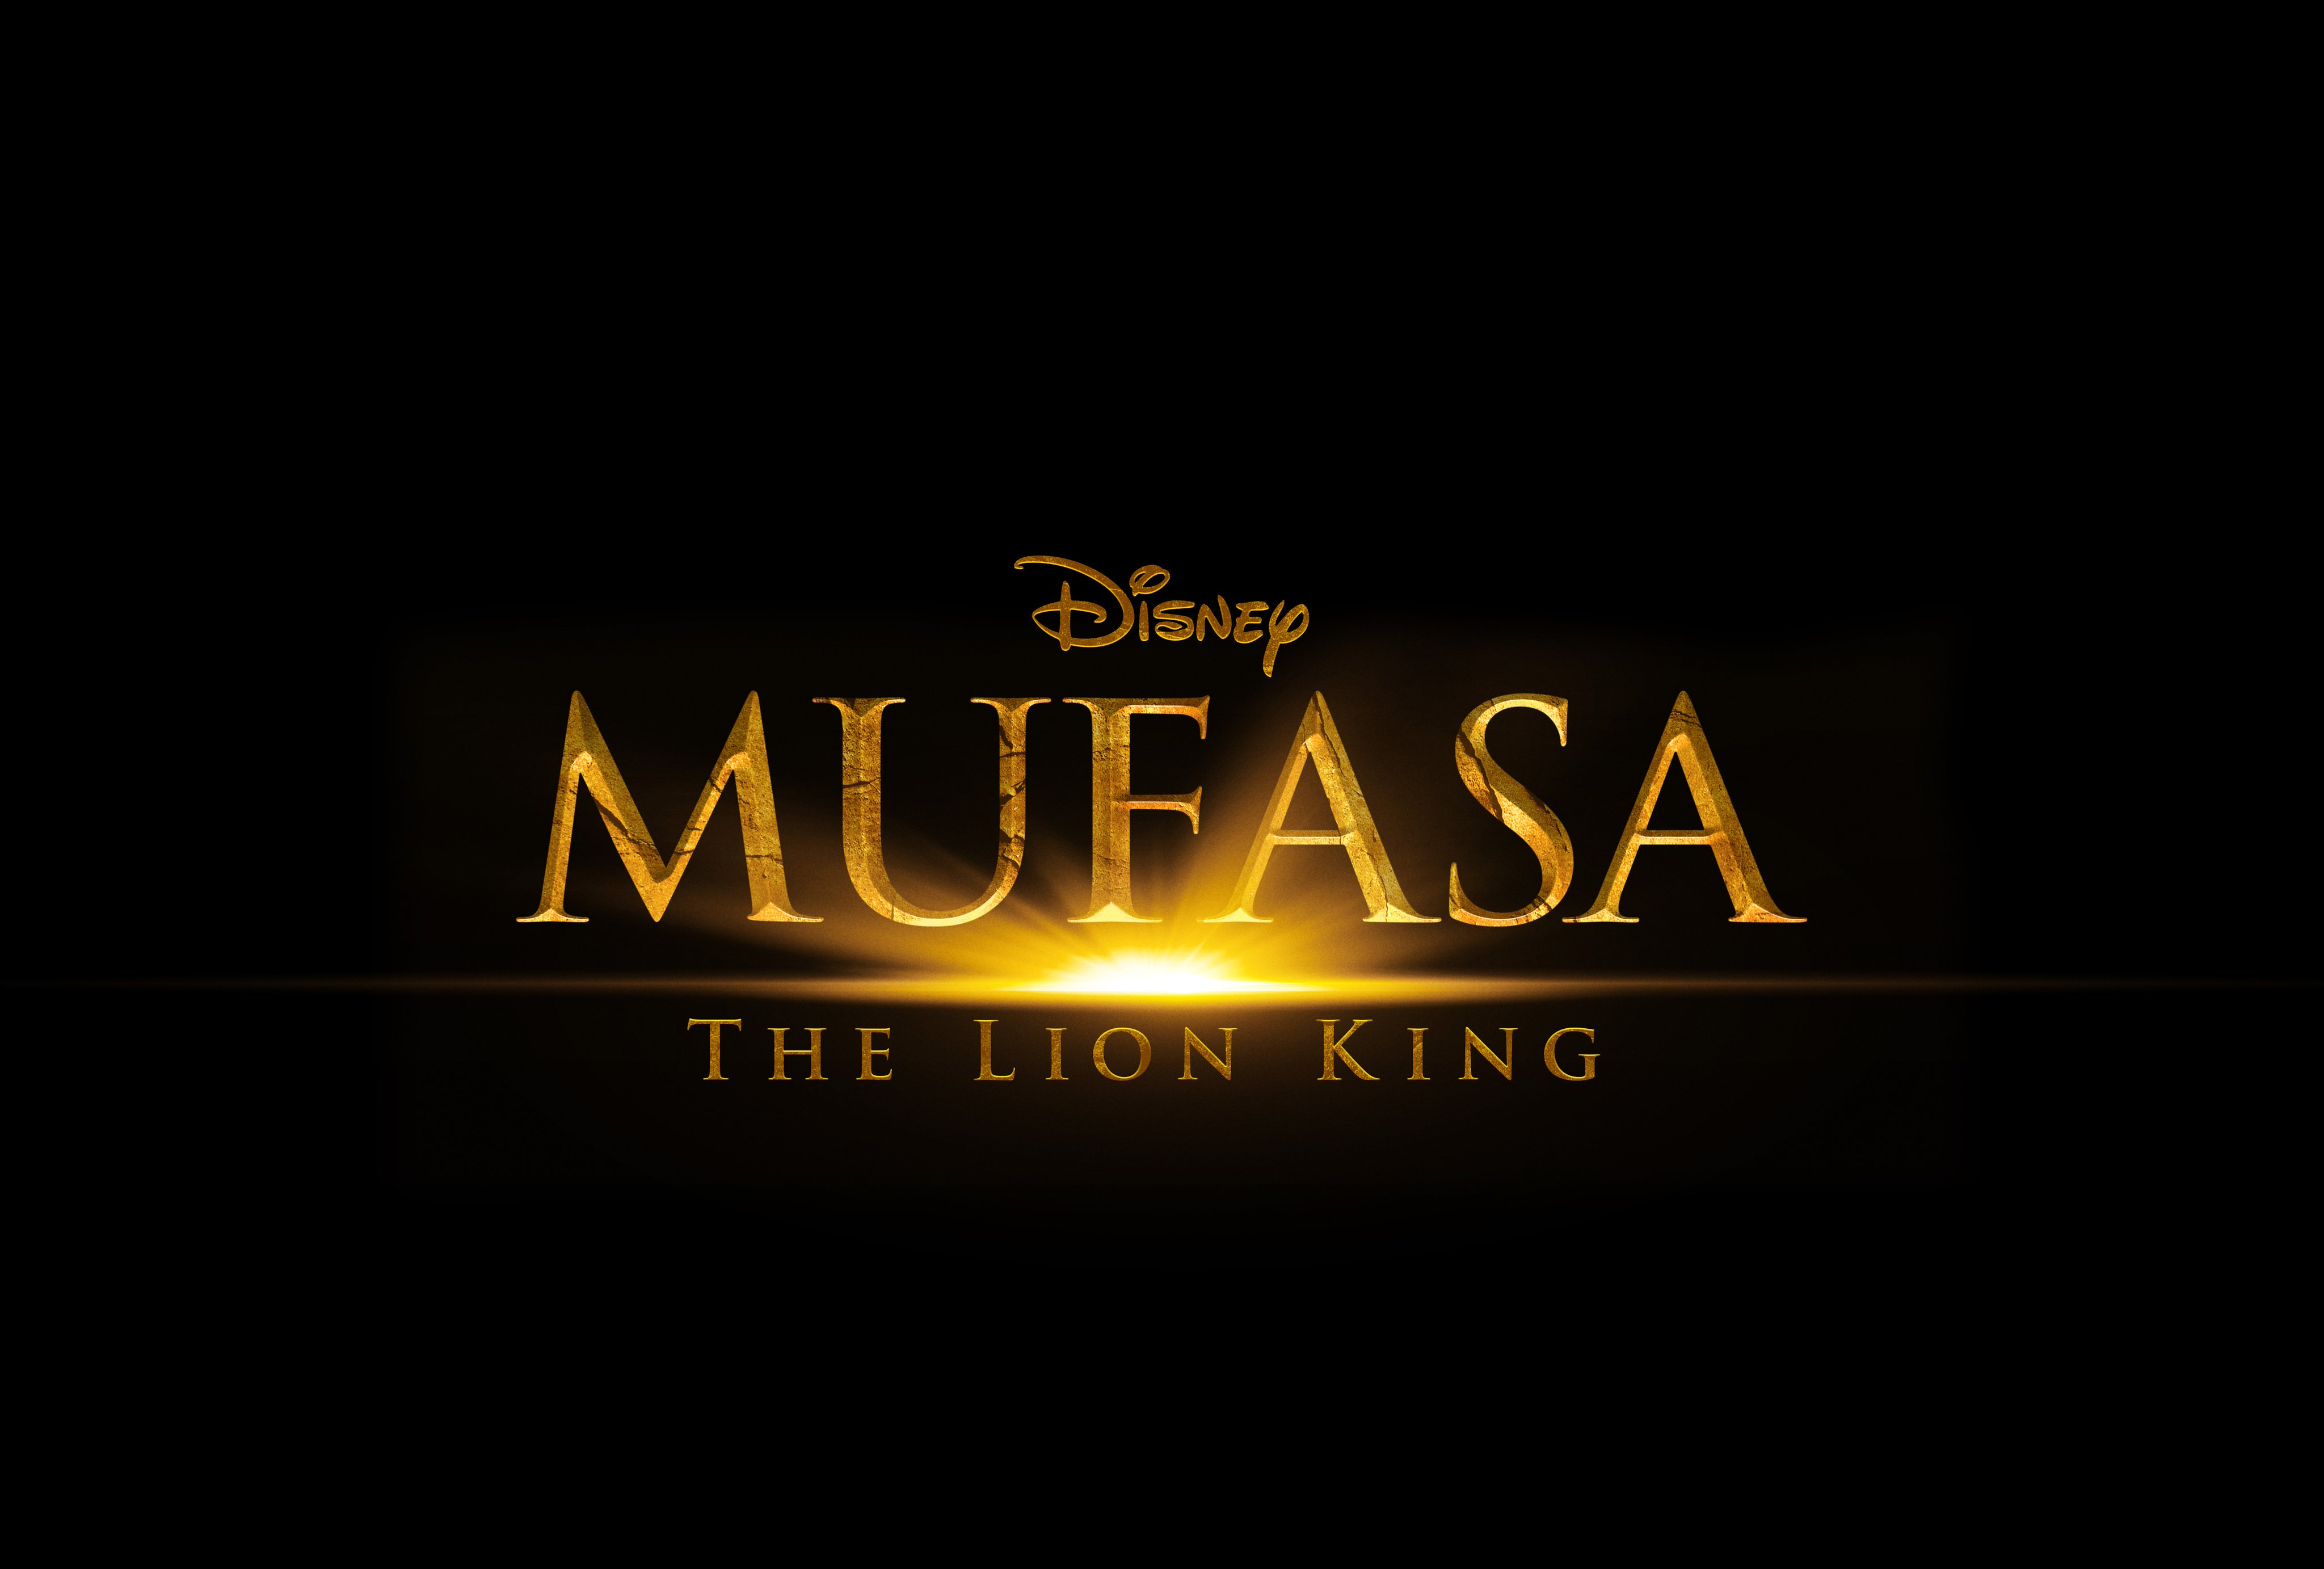 The Mufasa: The Lion King logo